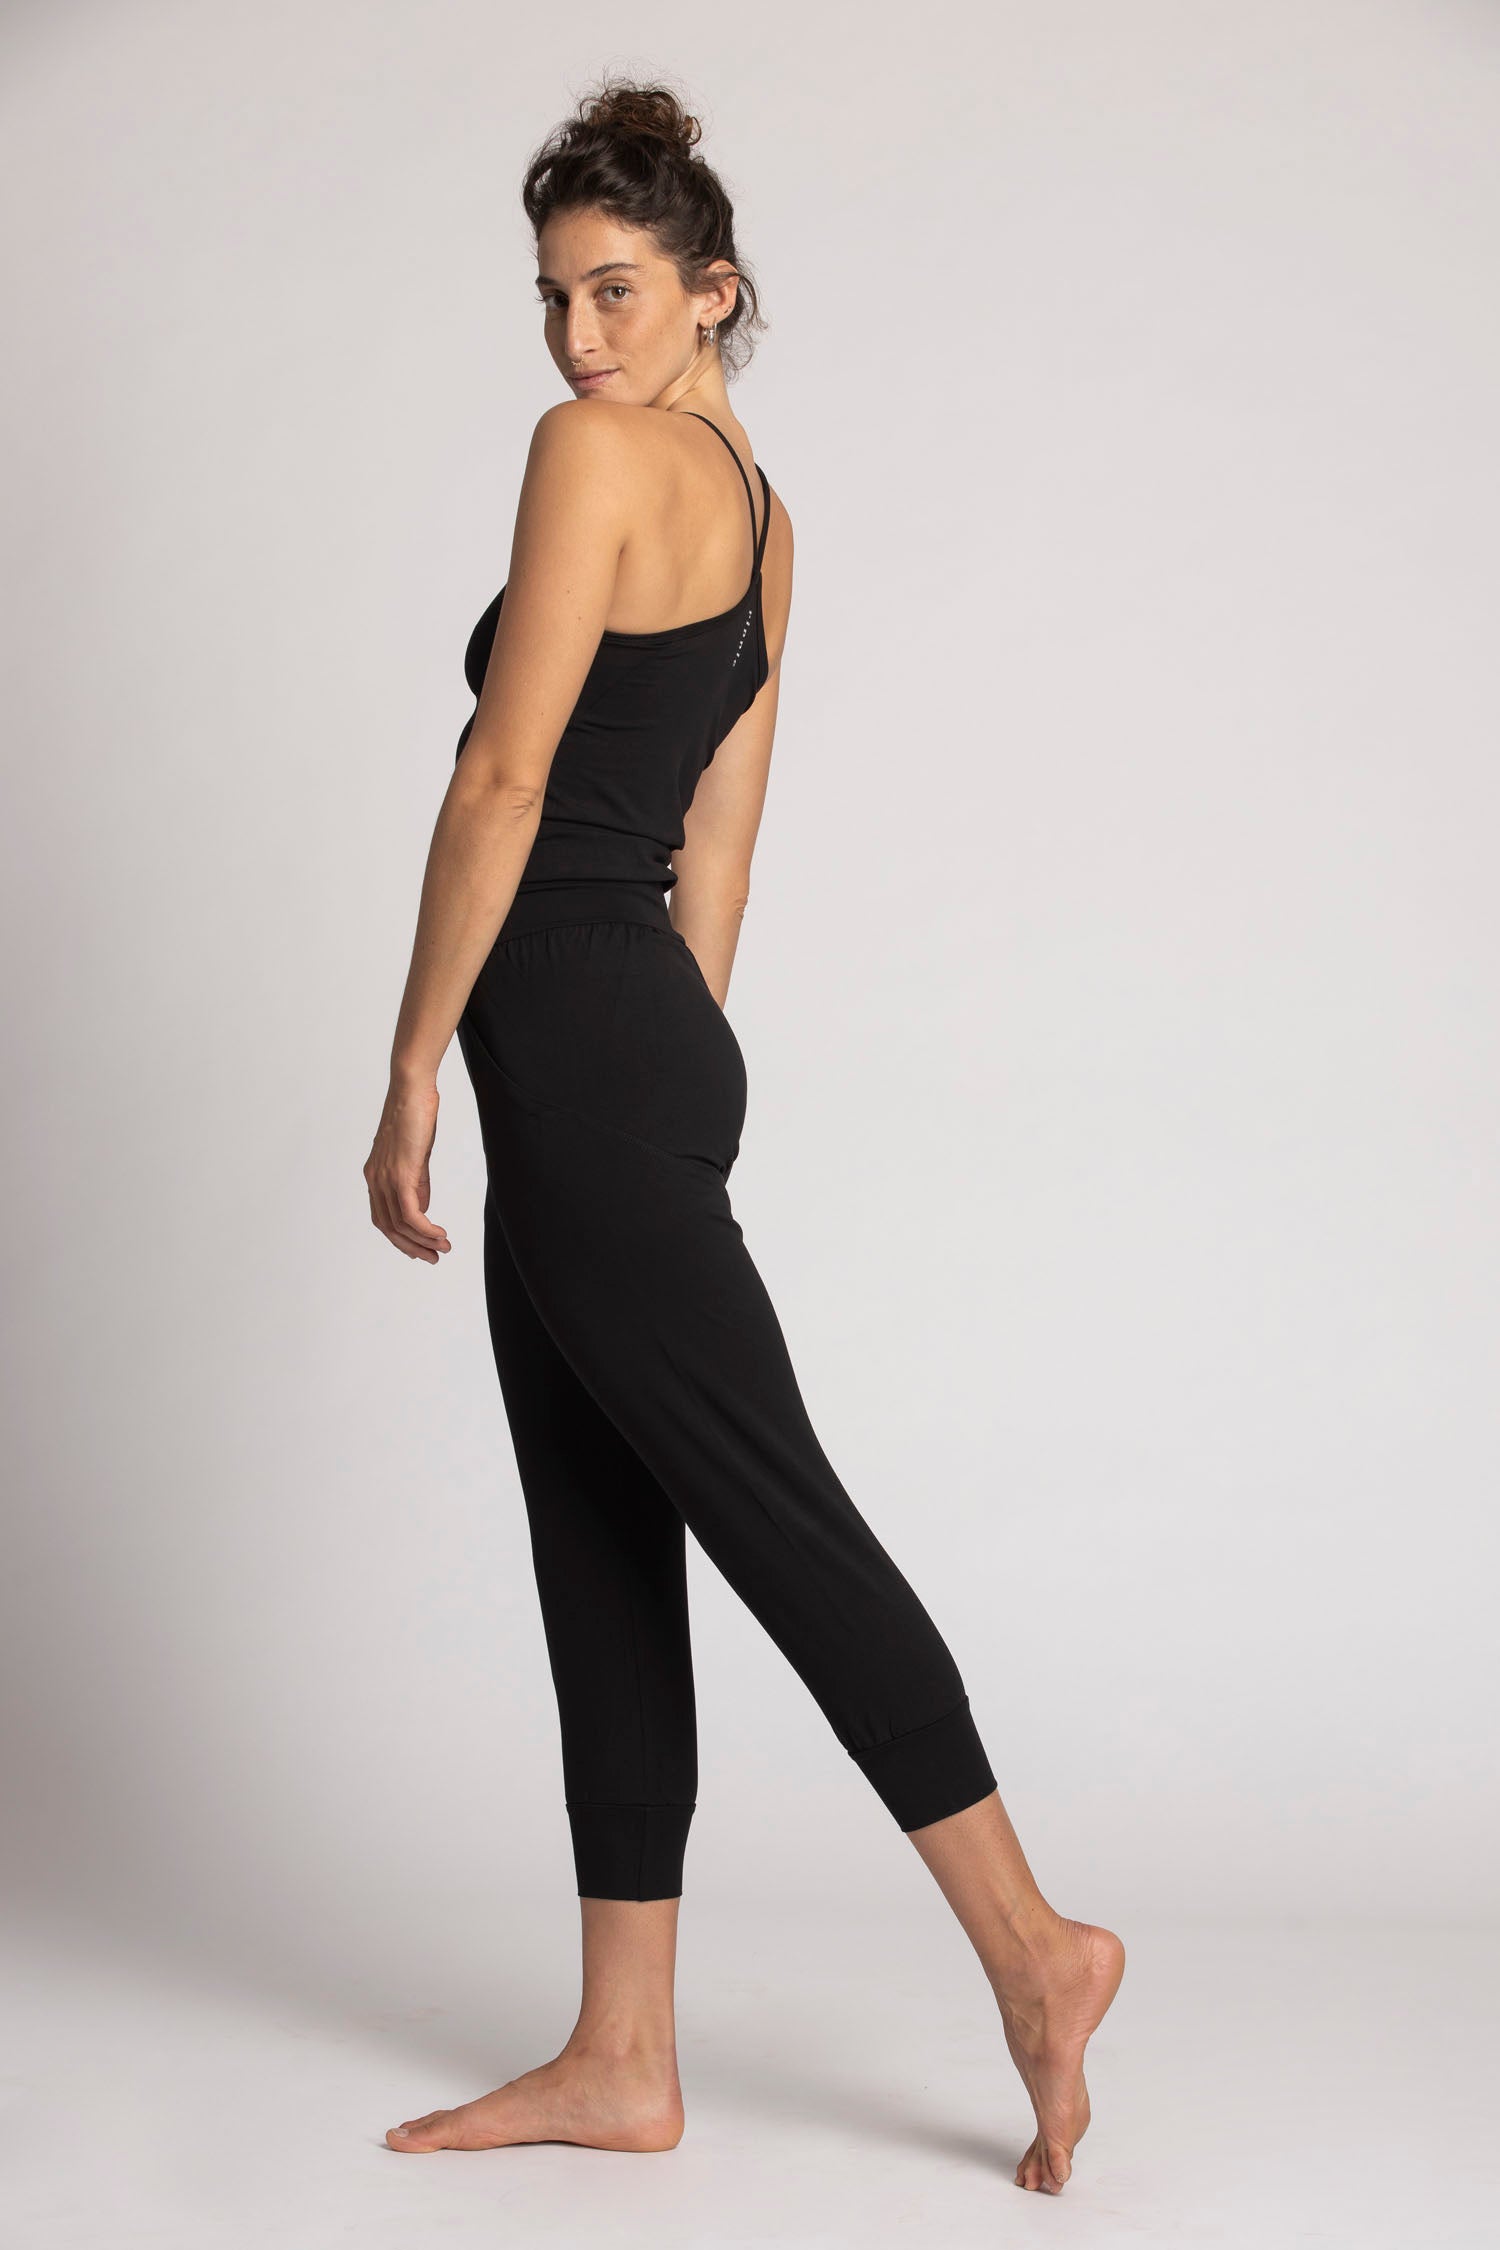 Black Sleeveless Cotton Yoga Wear – uNidraa